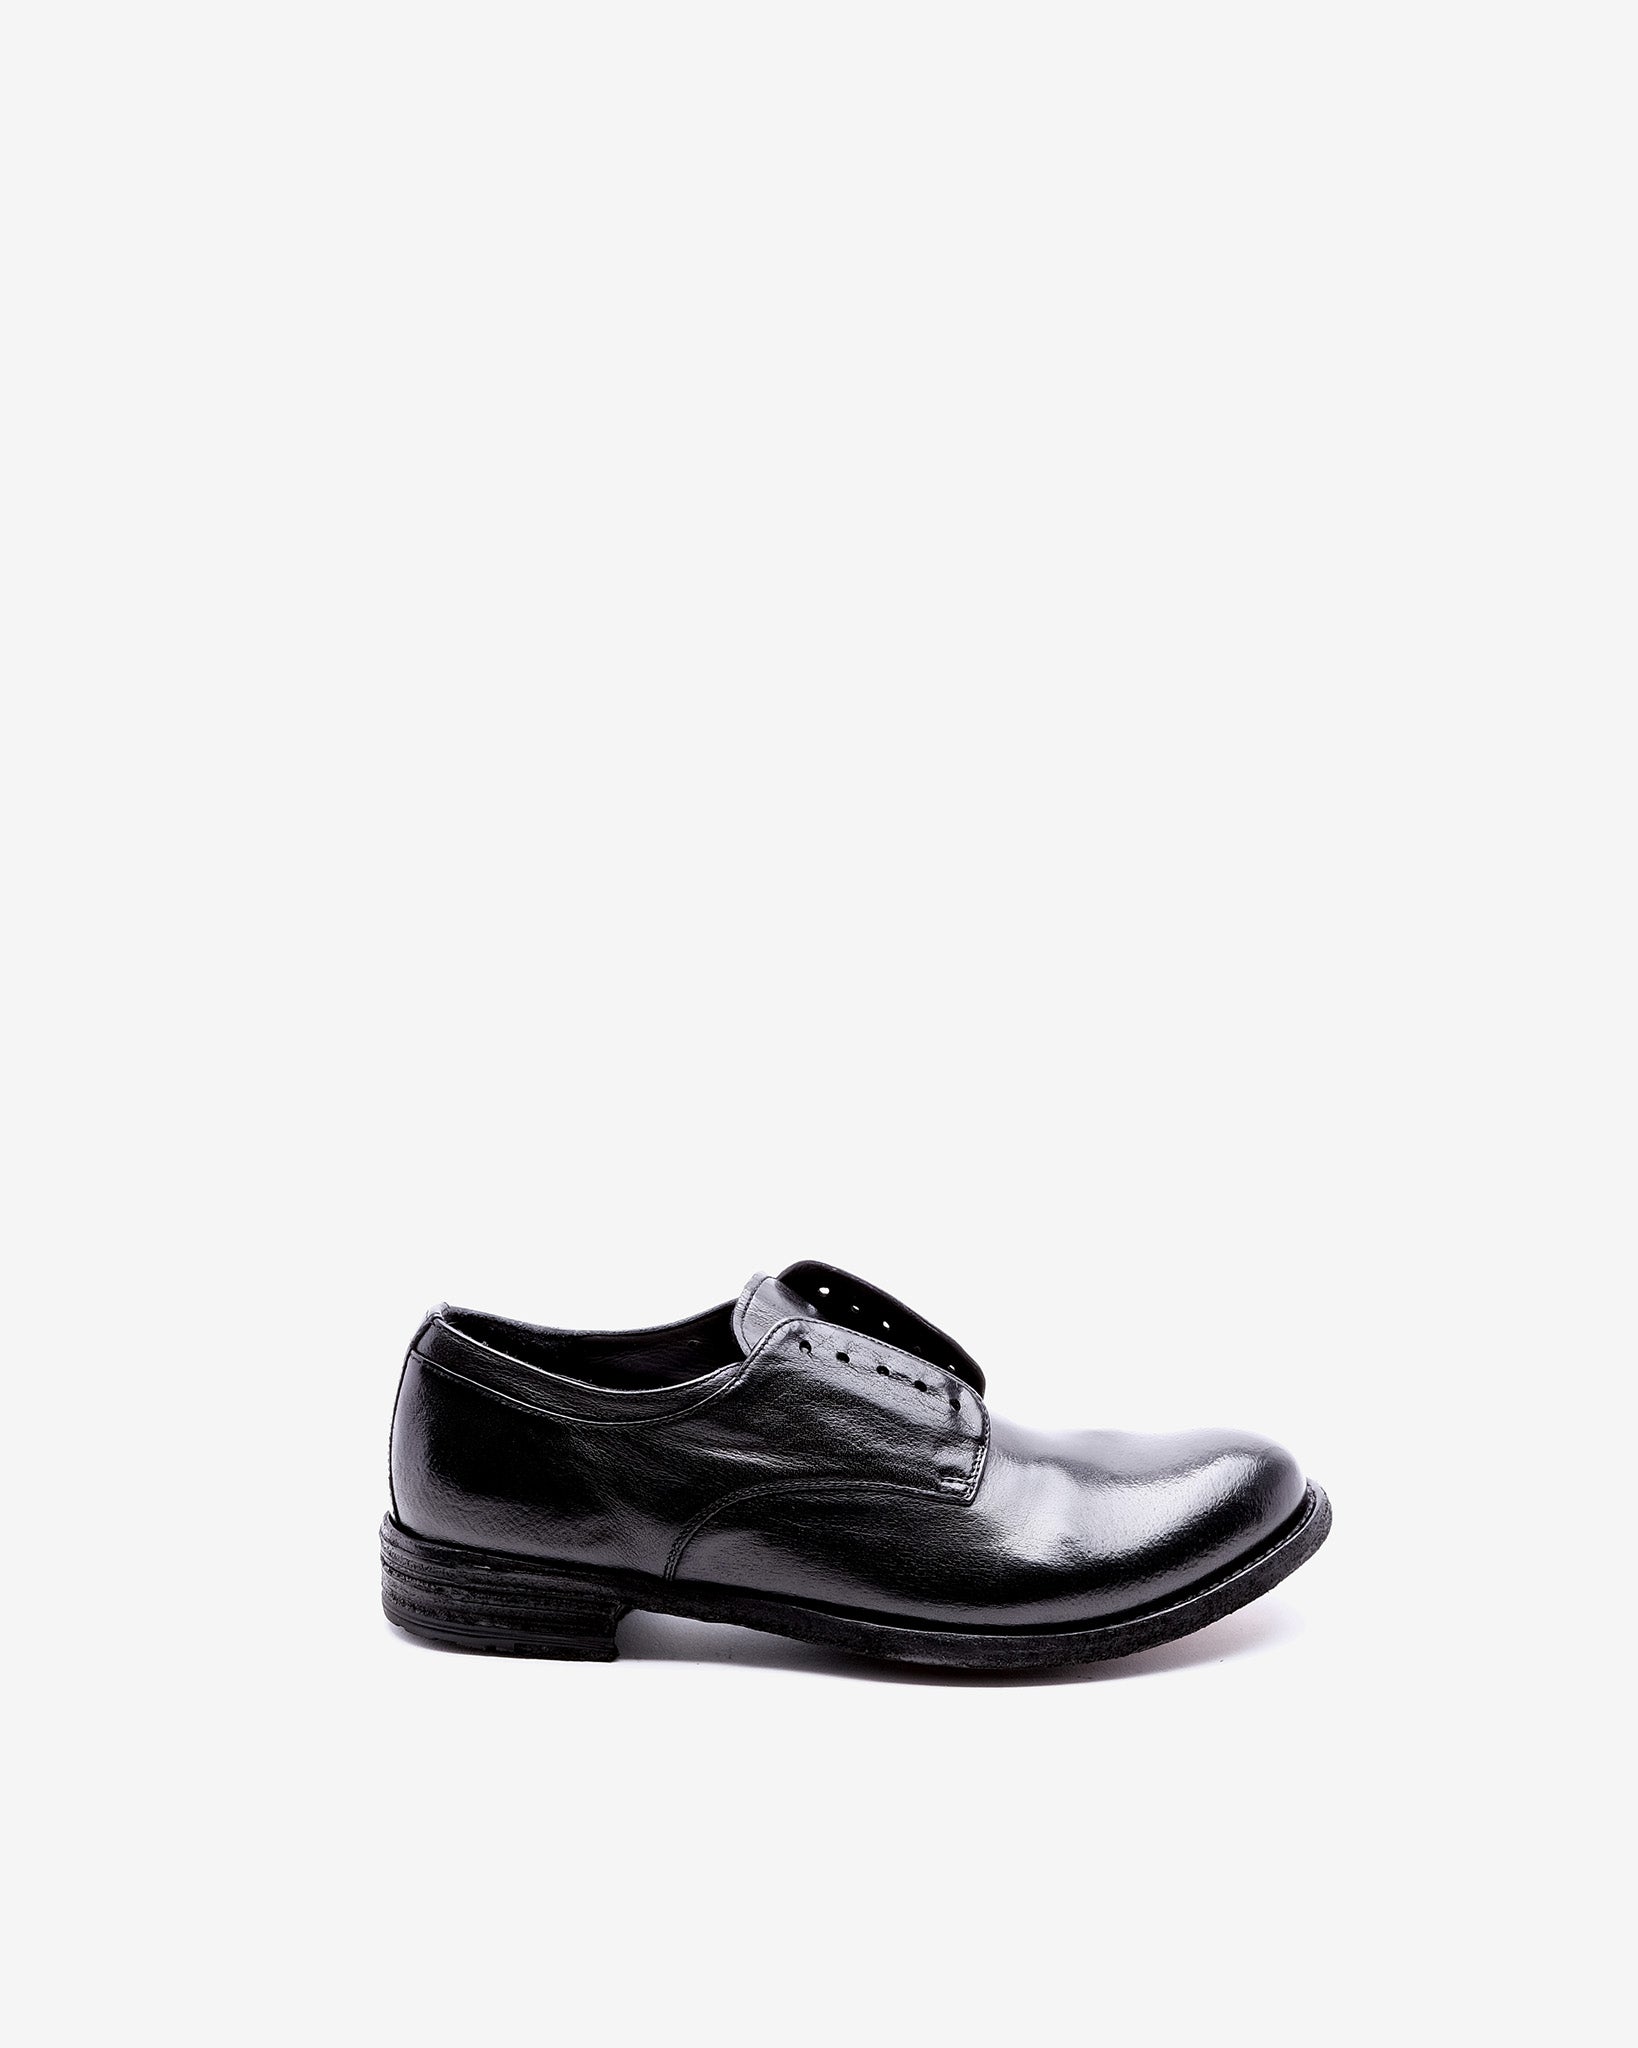 Lexikon 012 Ignis T. Nero Leather Shoes